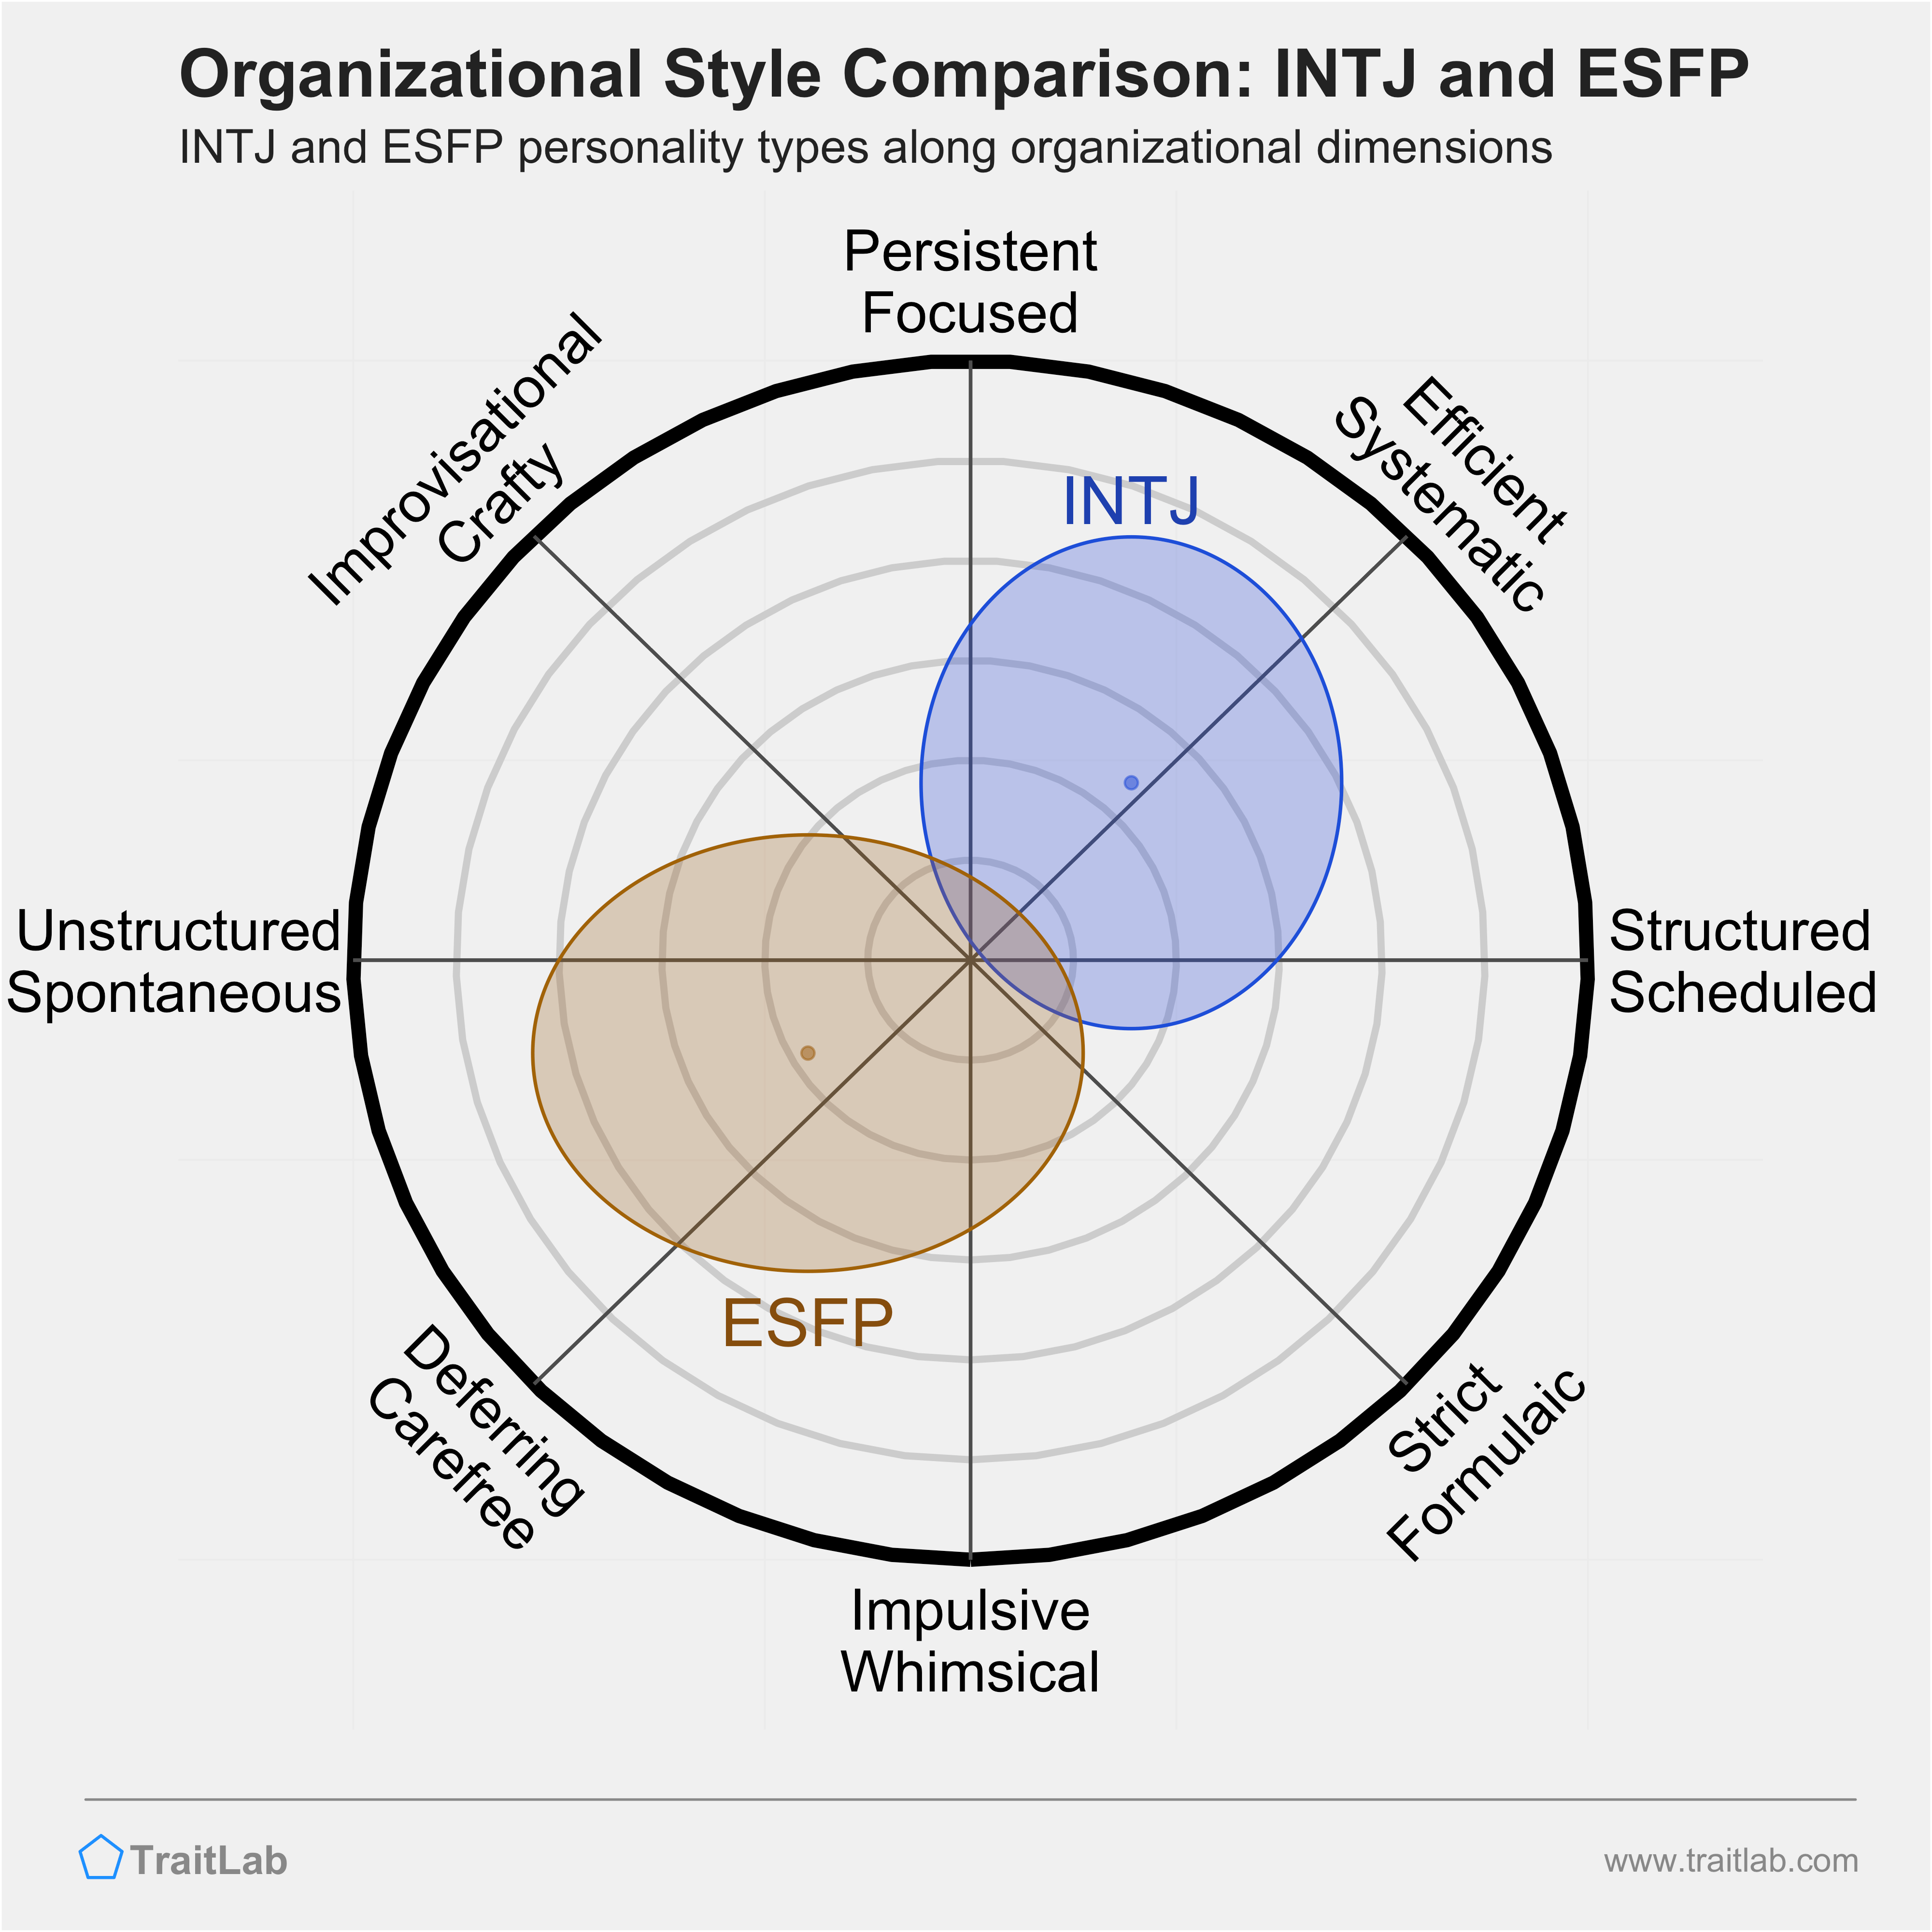 INTJ and ESFP comparison across organizational dimensions